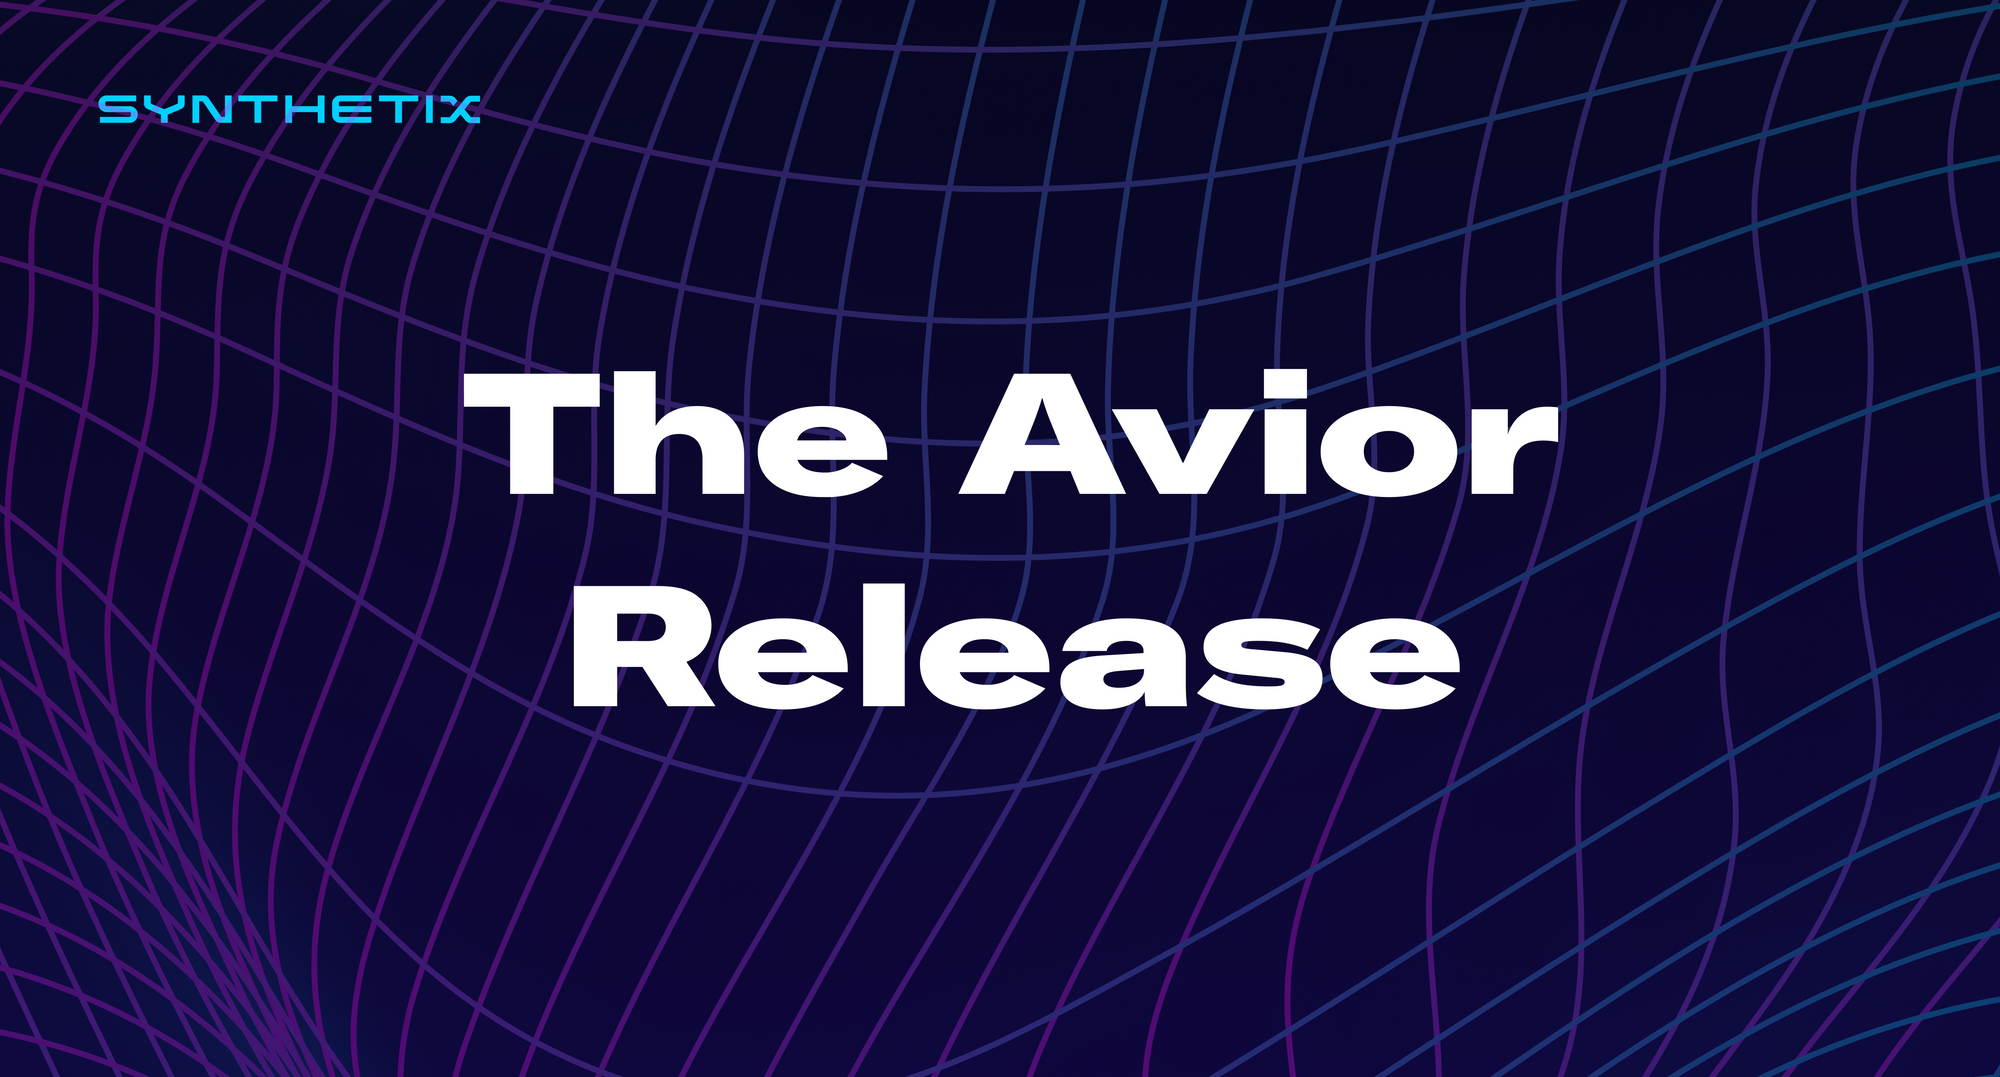 The Avior Release